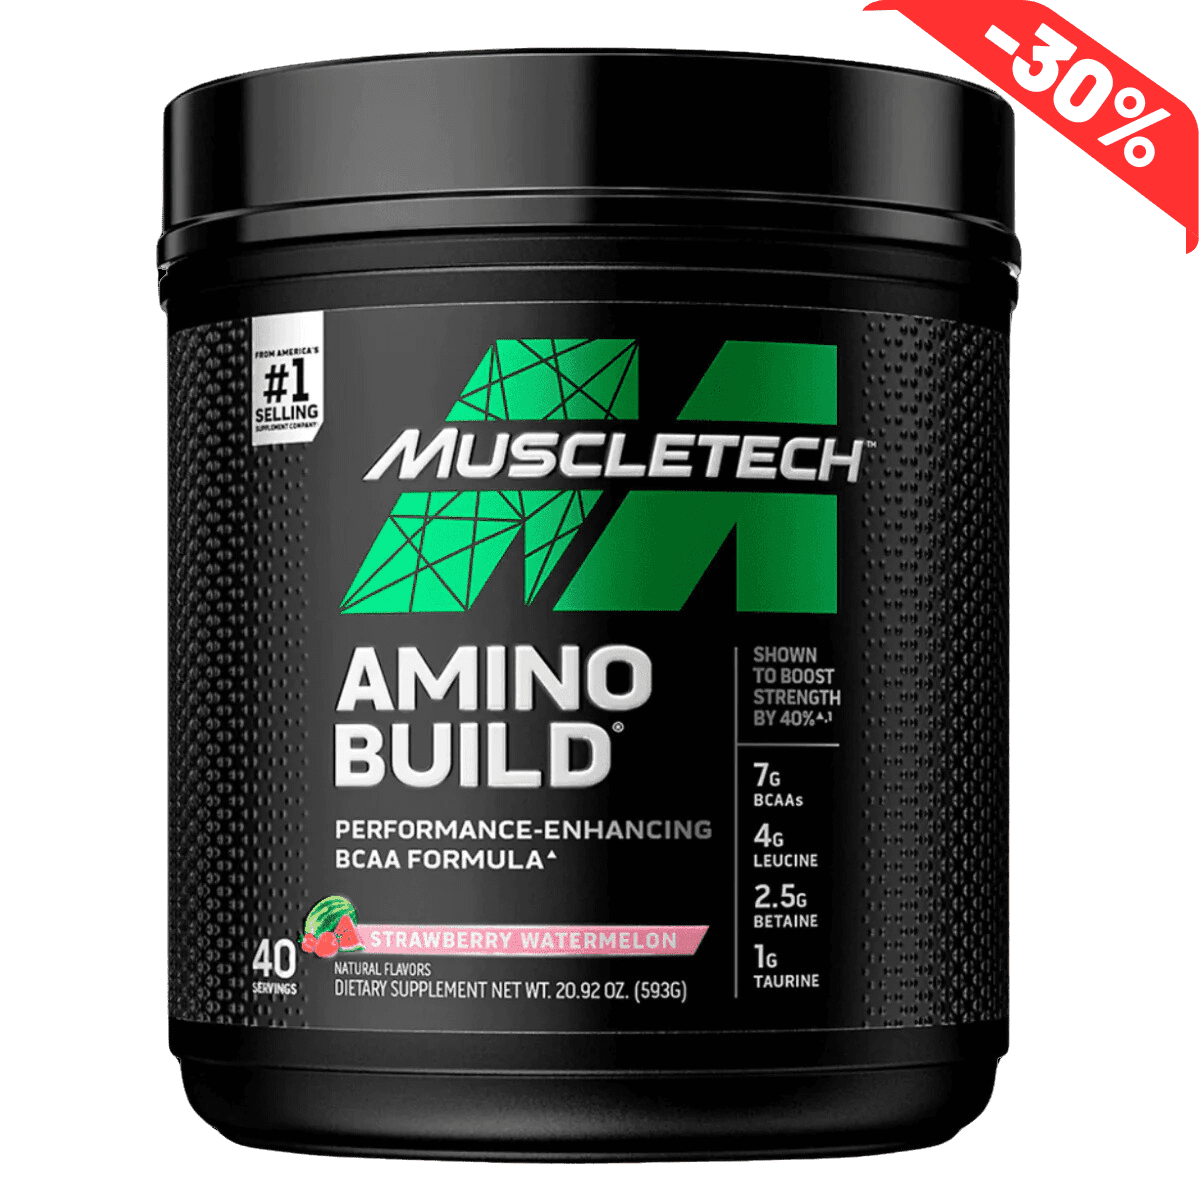 Muscletech Amino Build Performance | Muscle Freak